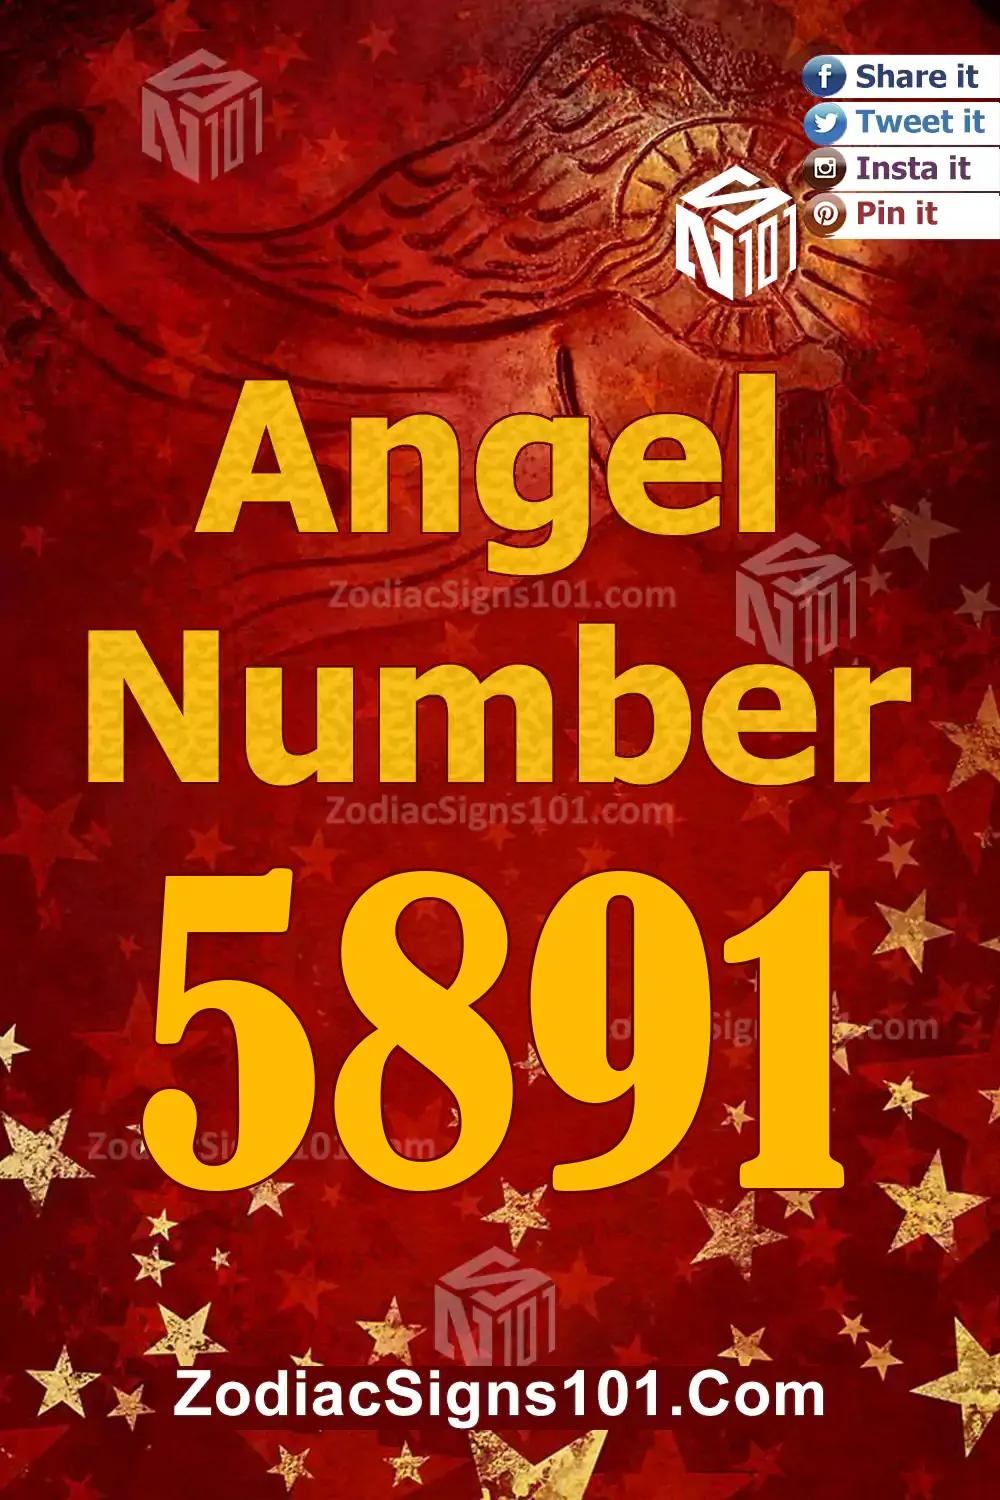 5891-Angel-Number-Meaning.jpg